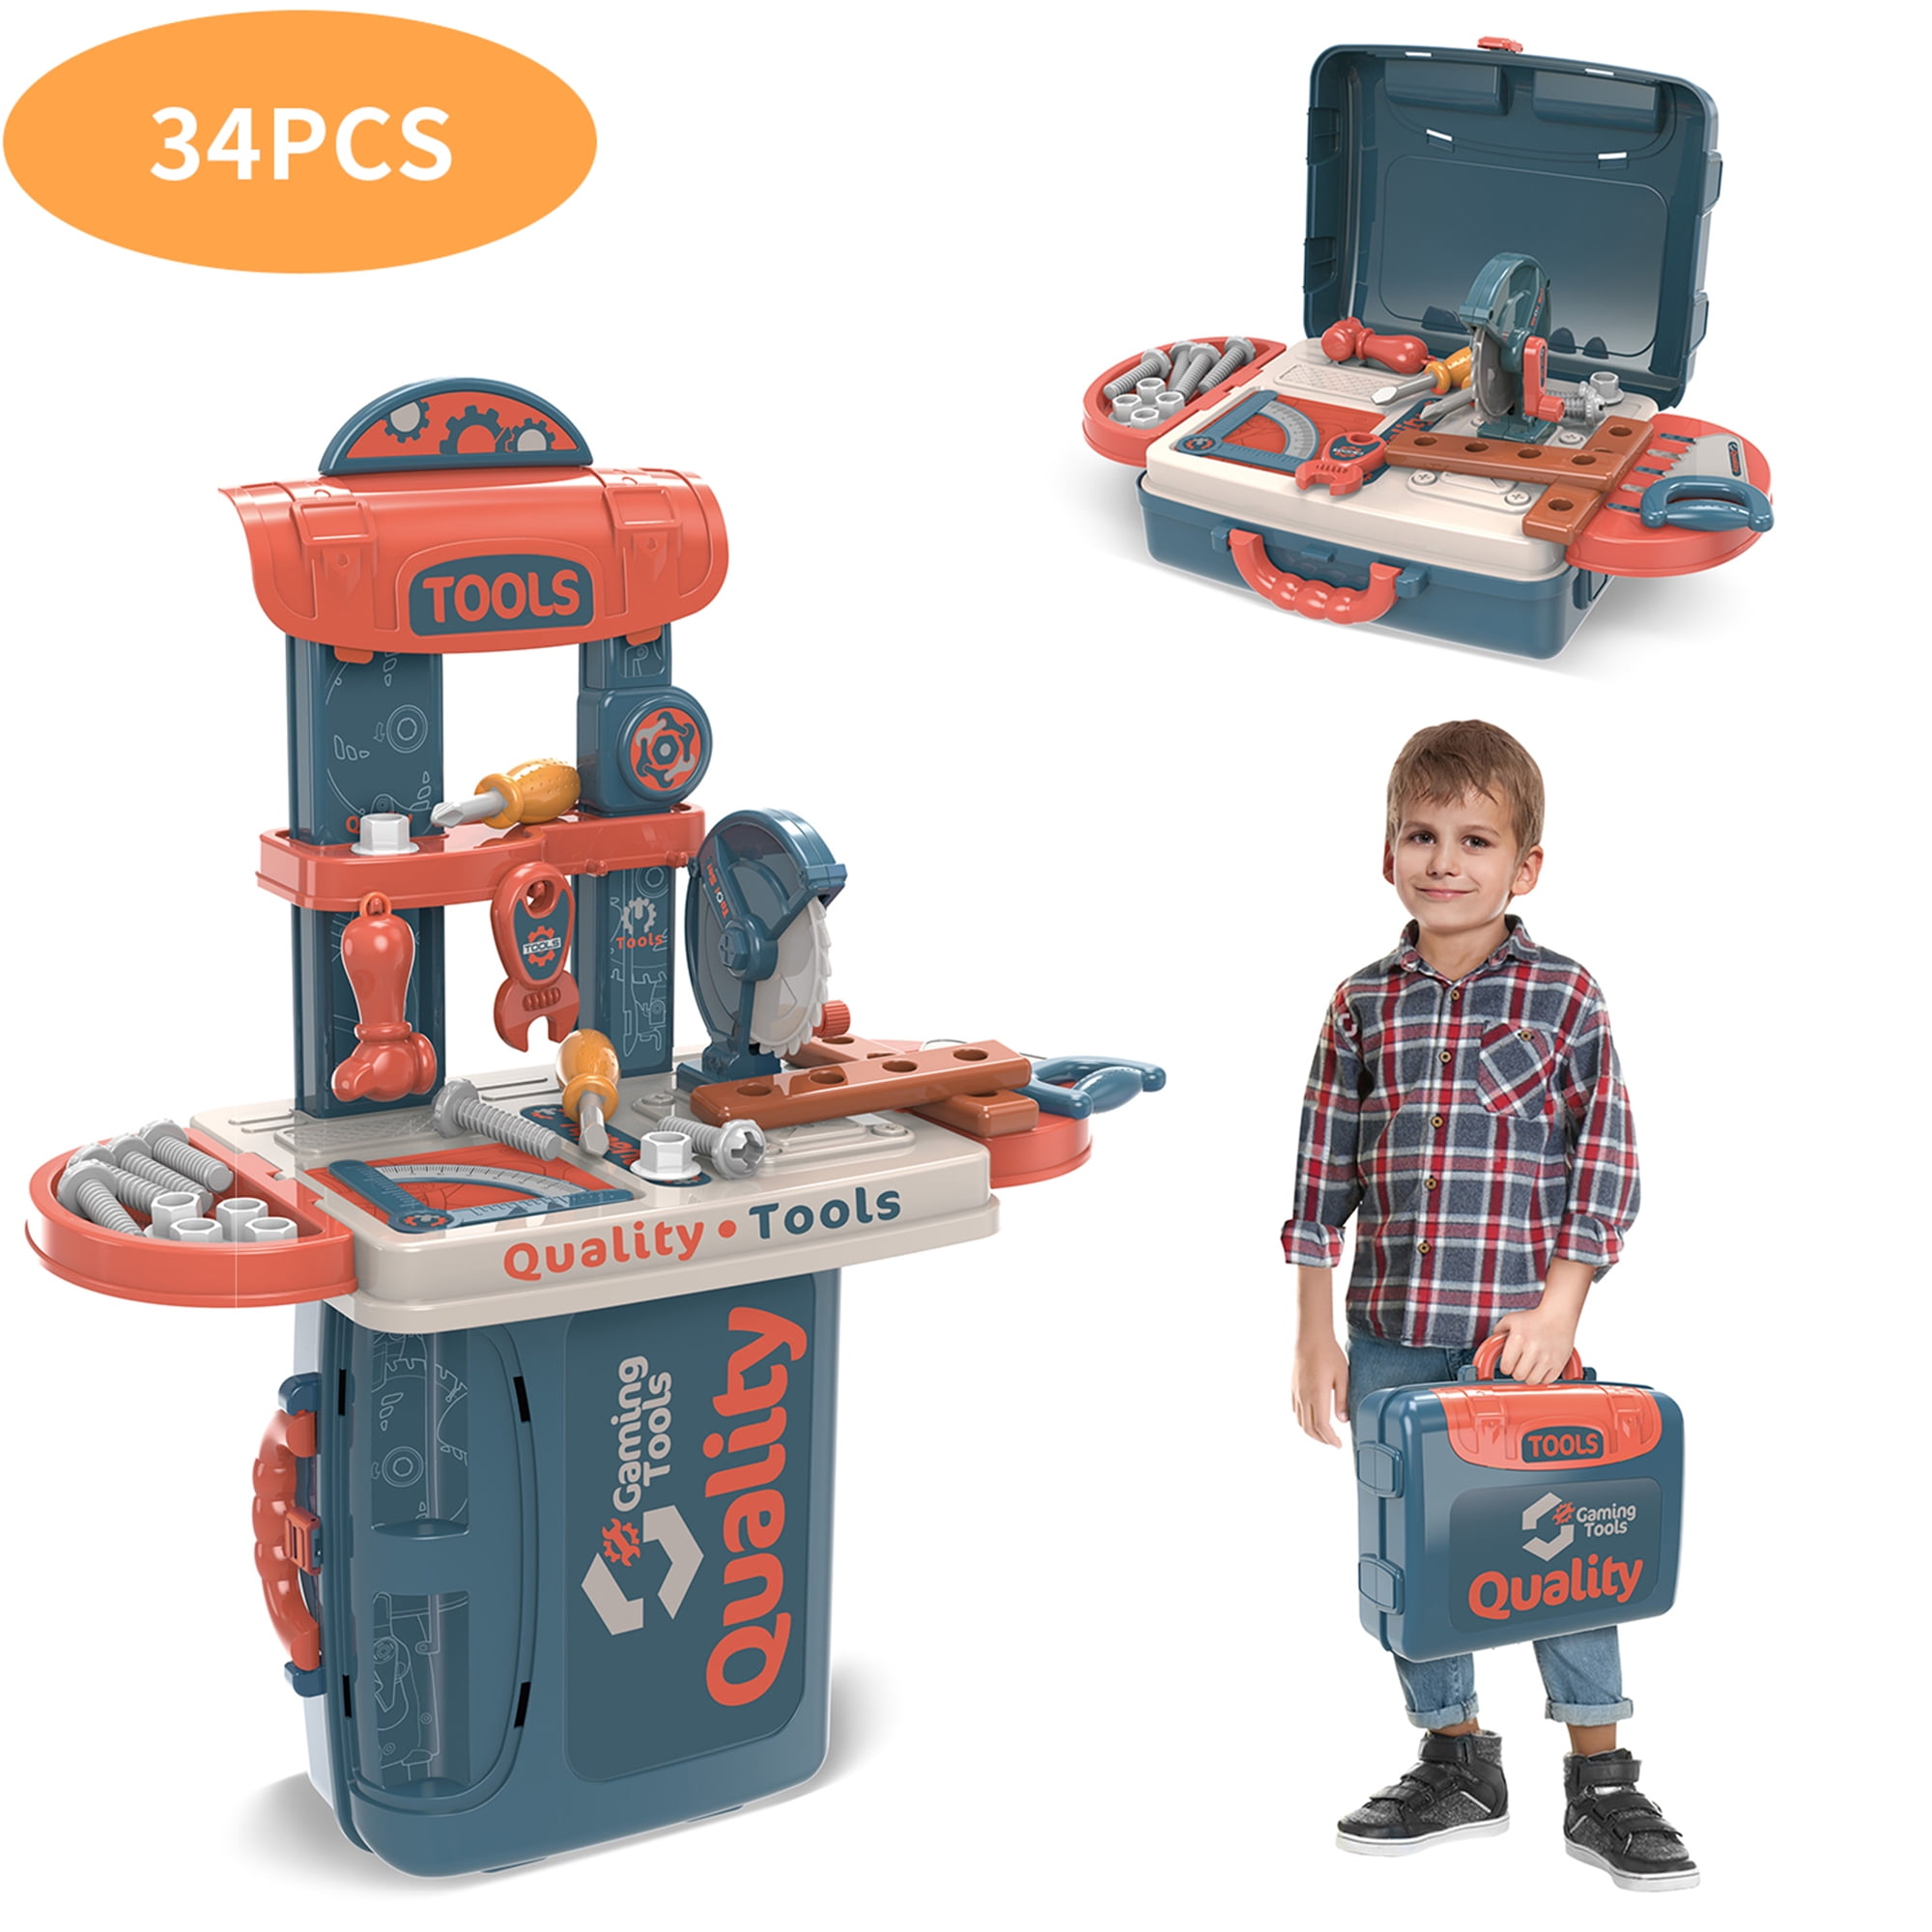 Black & Decker Junior Kids Tool Set-Mega Tool Set 42 Pc. Tools & Accessories